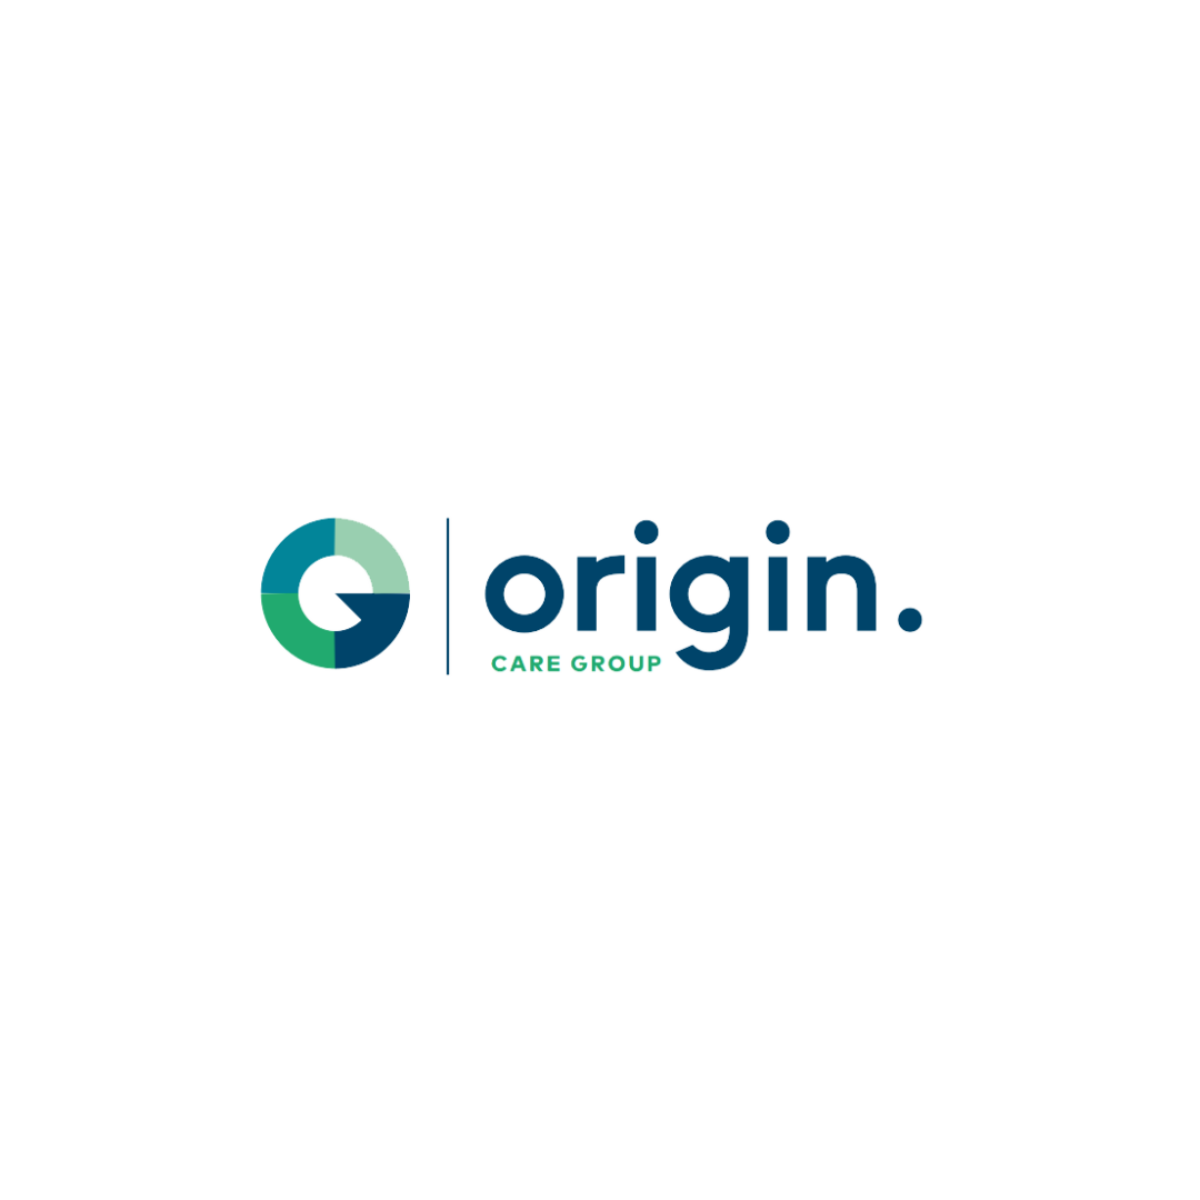 Origin Care Group CareTech Matchmaking